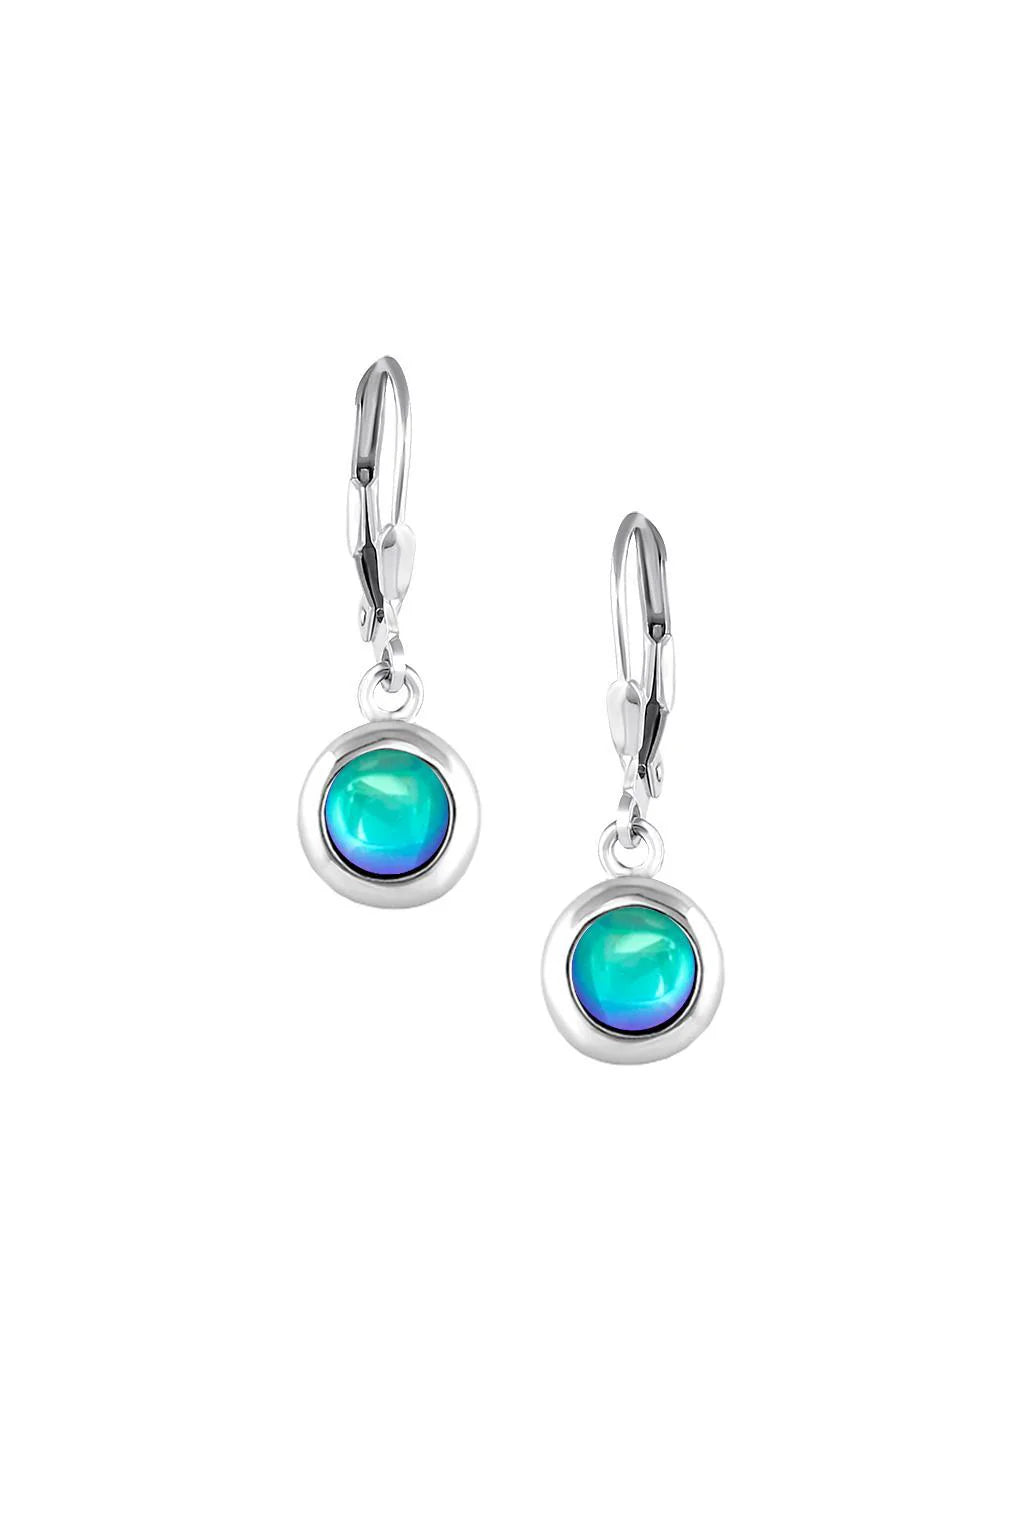 aqua crystal and sterling teeny tiny earrings